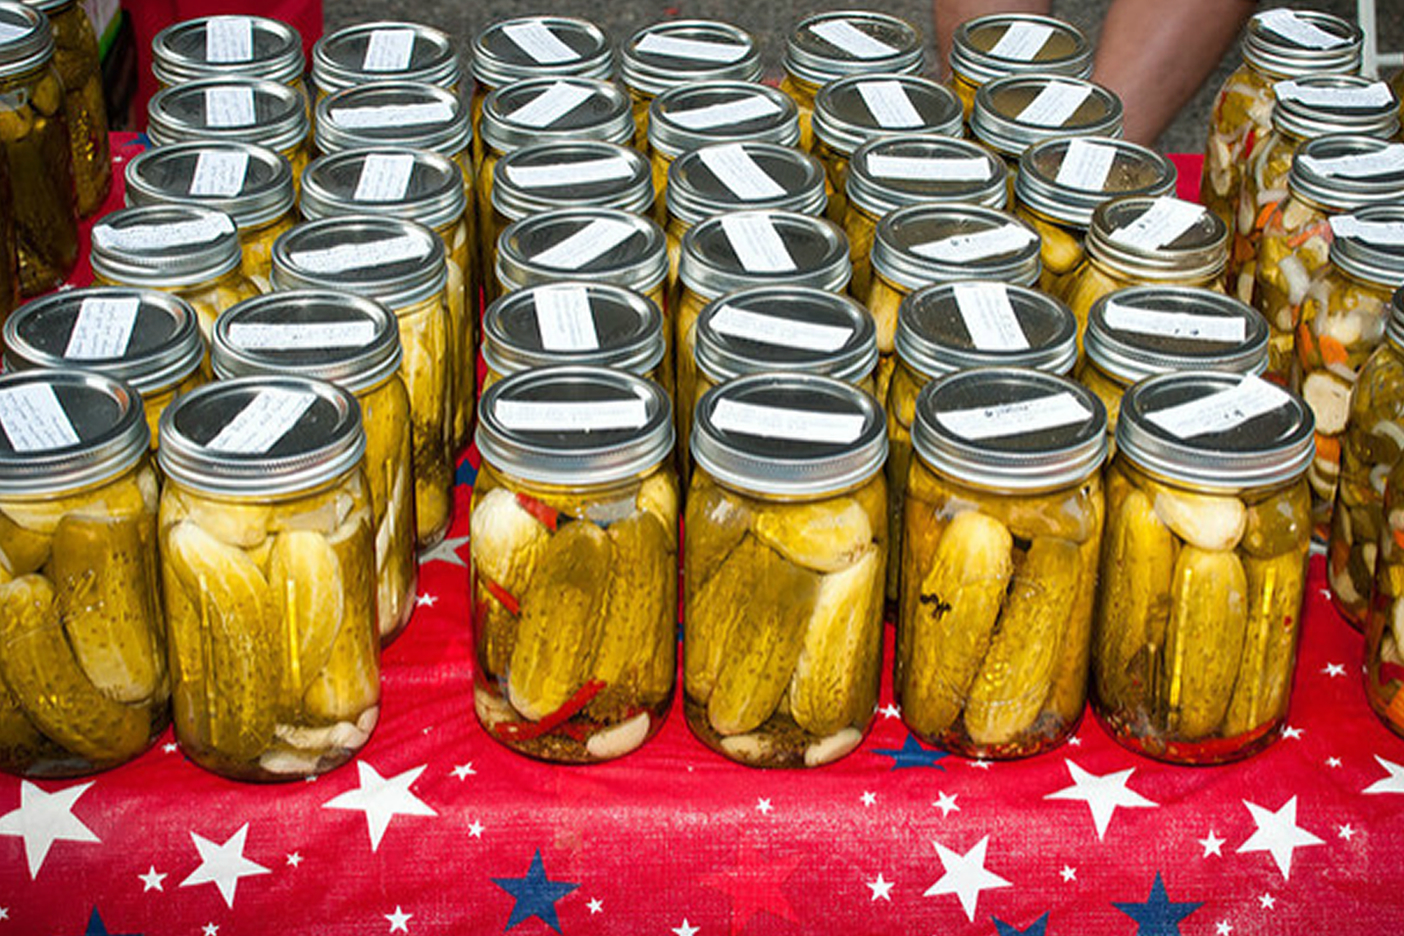 Polish Pickle Run Bremond, Texas Awards Pickle Jars